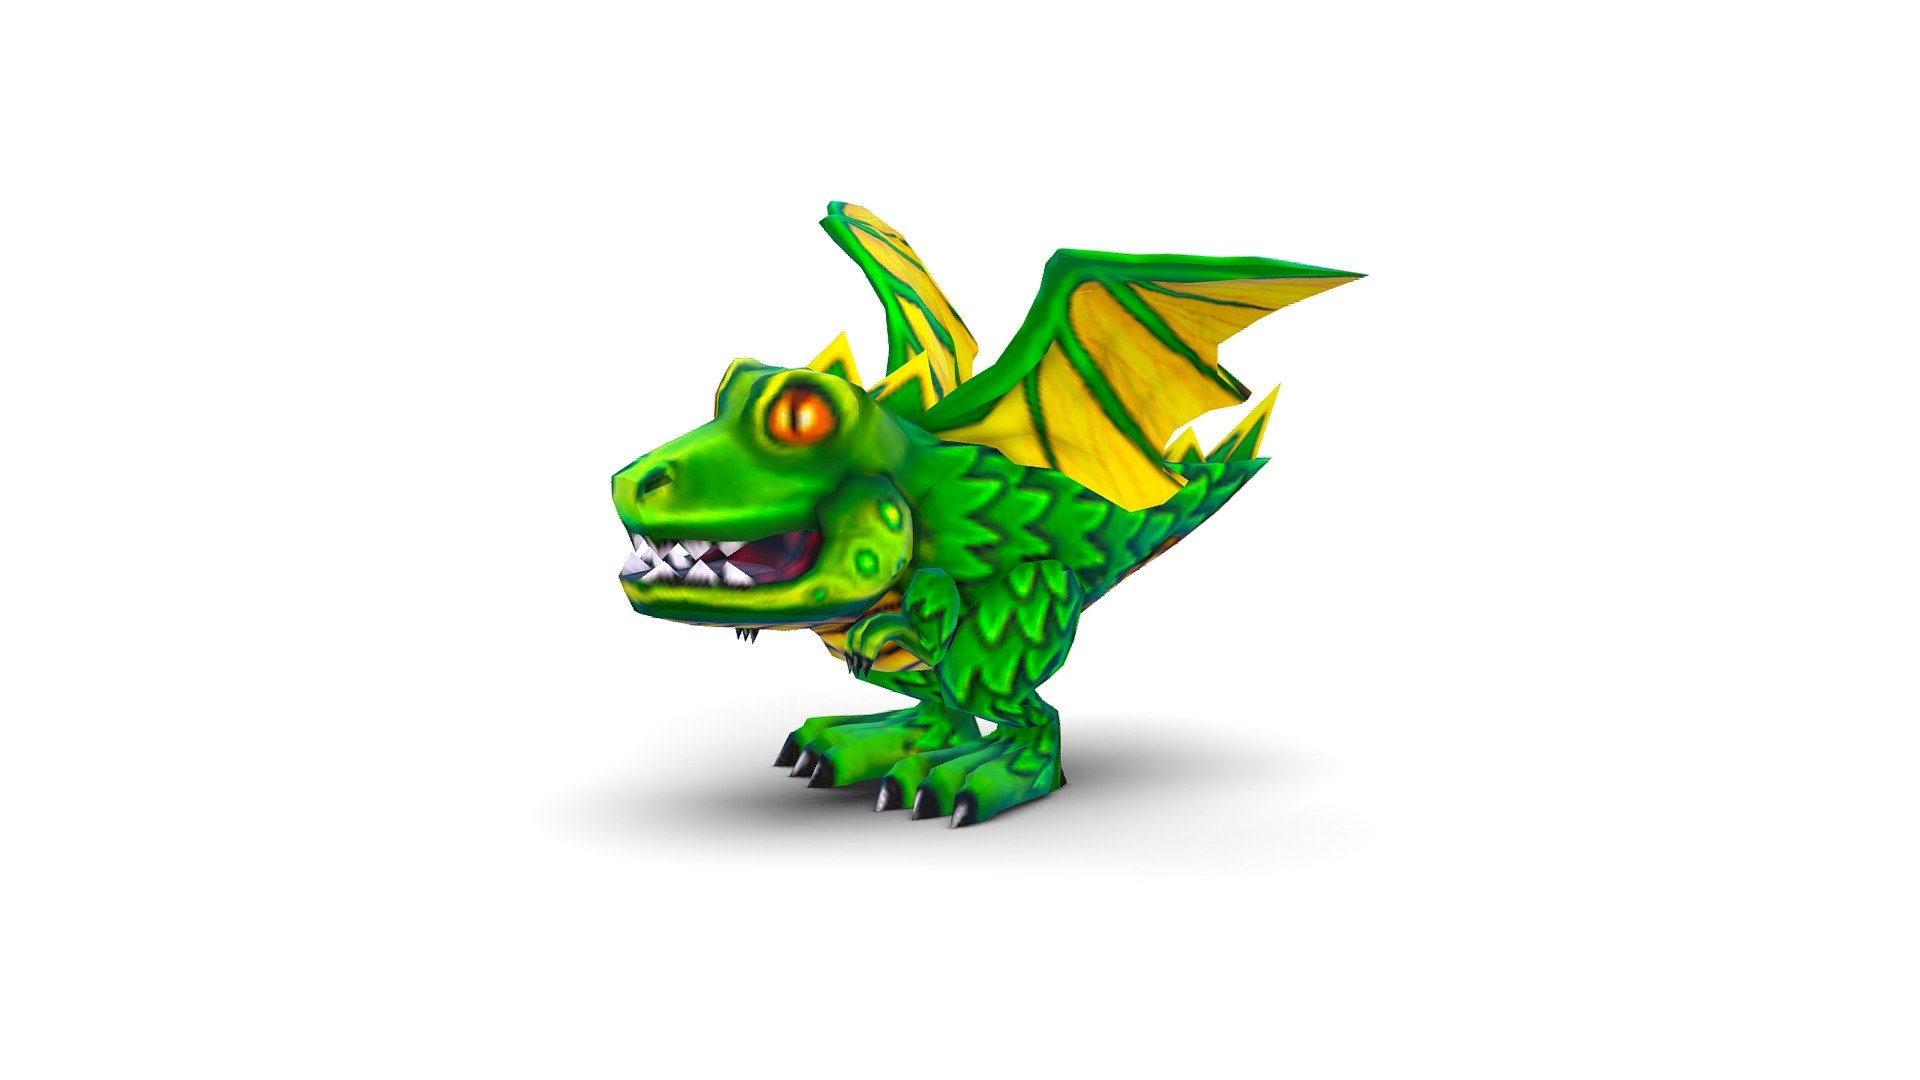 lowpoly 3d model cartoon green dragon - 3dsMax file included - lowpoly 3d model cartoon green dragon - Buy Royalty Free 3D model by Oleg Shuldiakov (@olegshuldiakov) 3d model